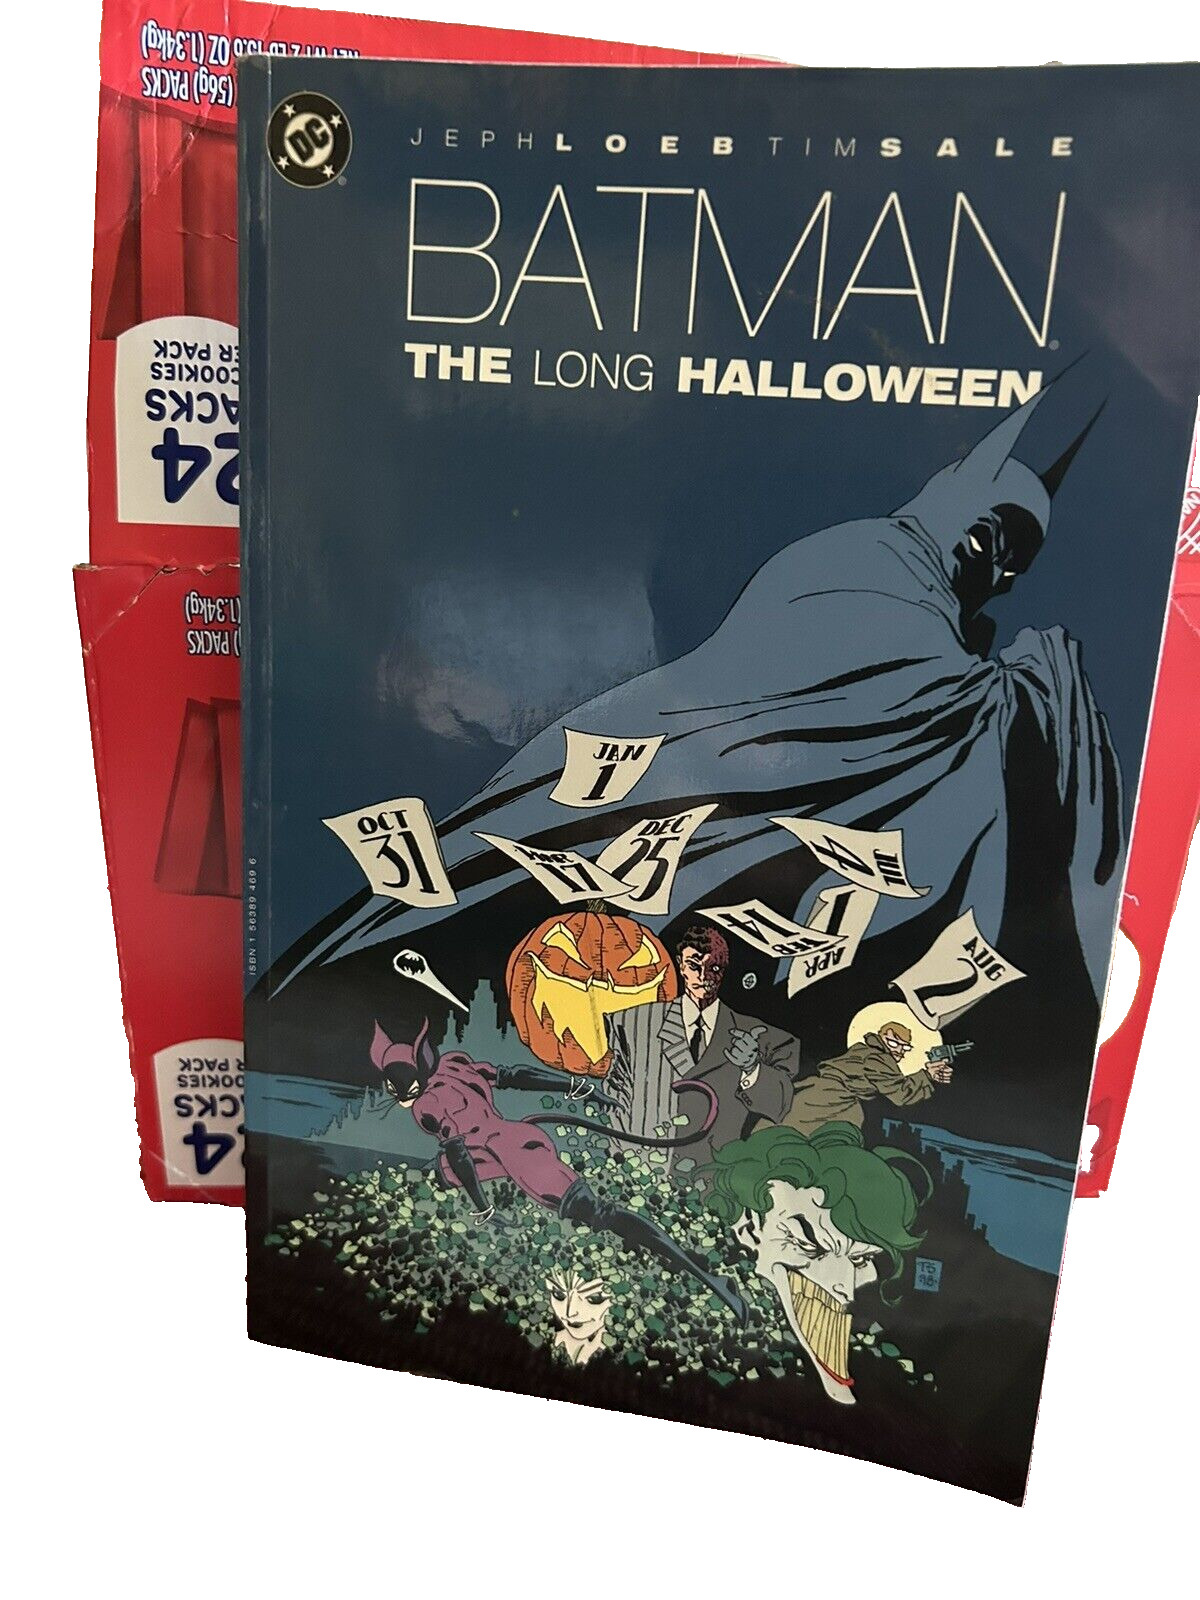 ABSOLUTE Batman: The Long Halloween (DC Comics, 1998 TPB